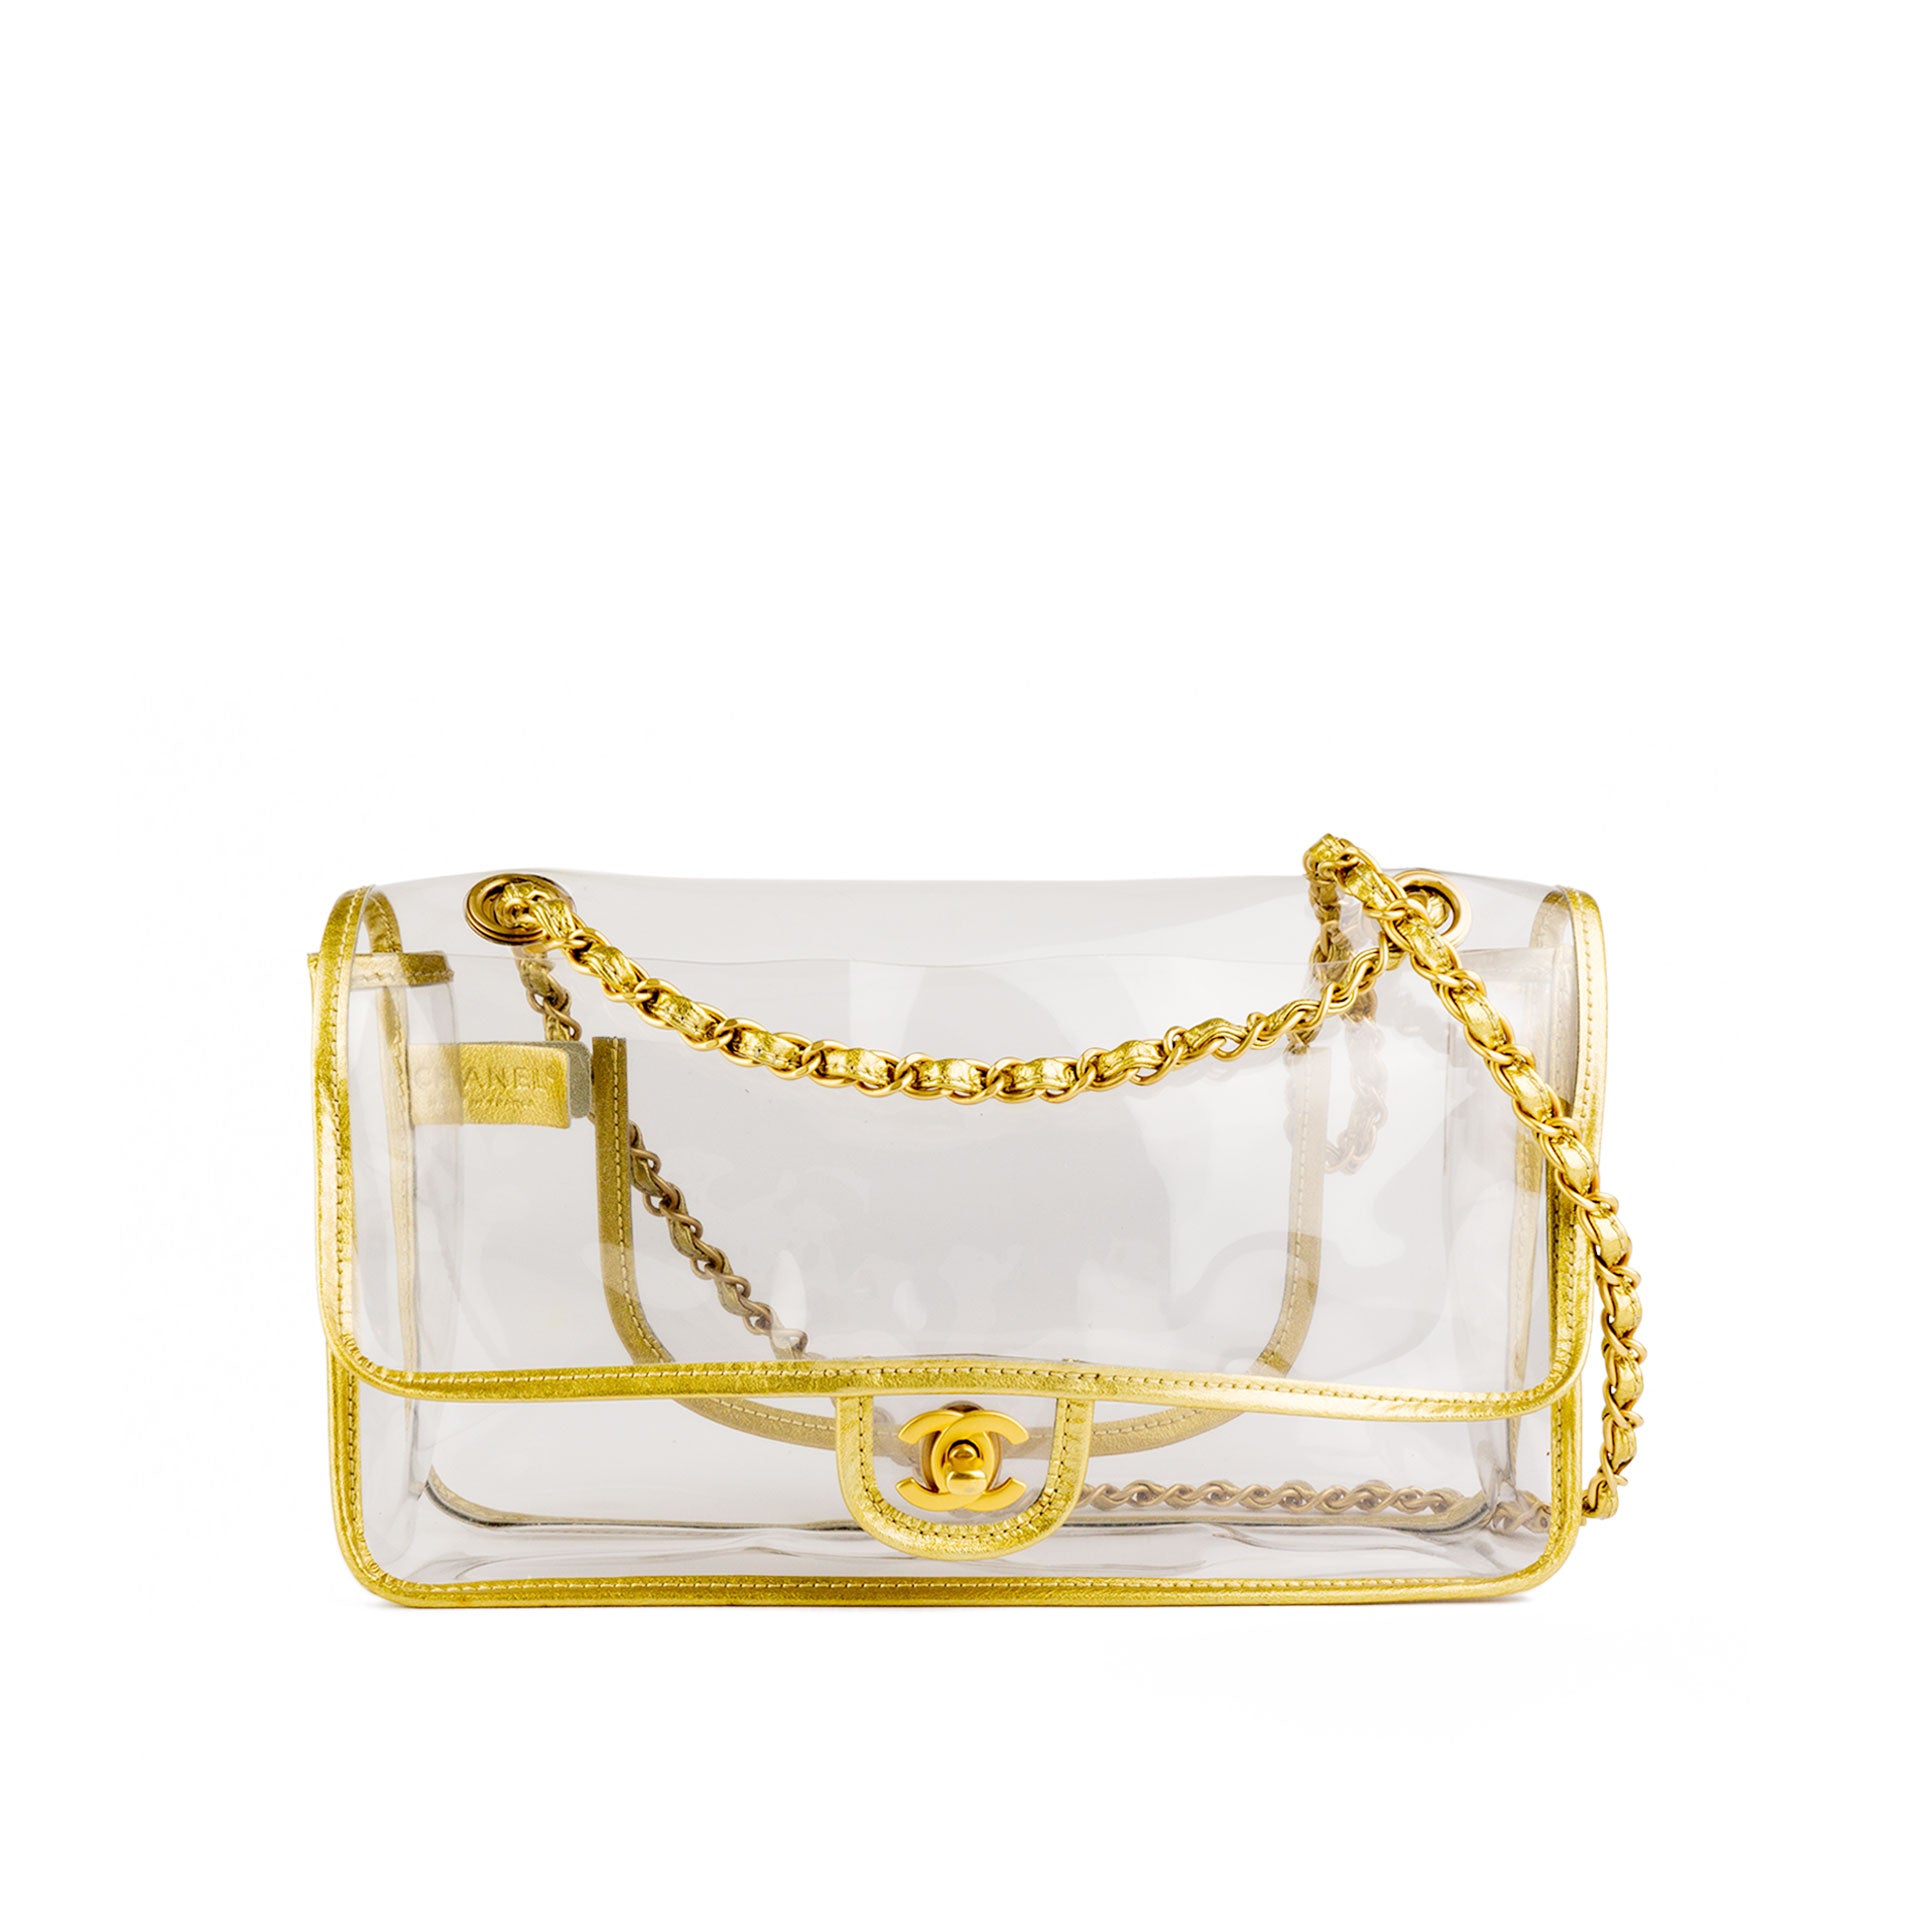 classic gold chanel bag